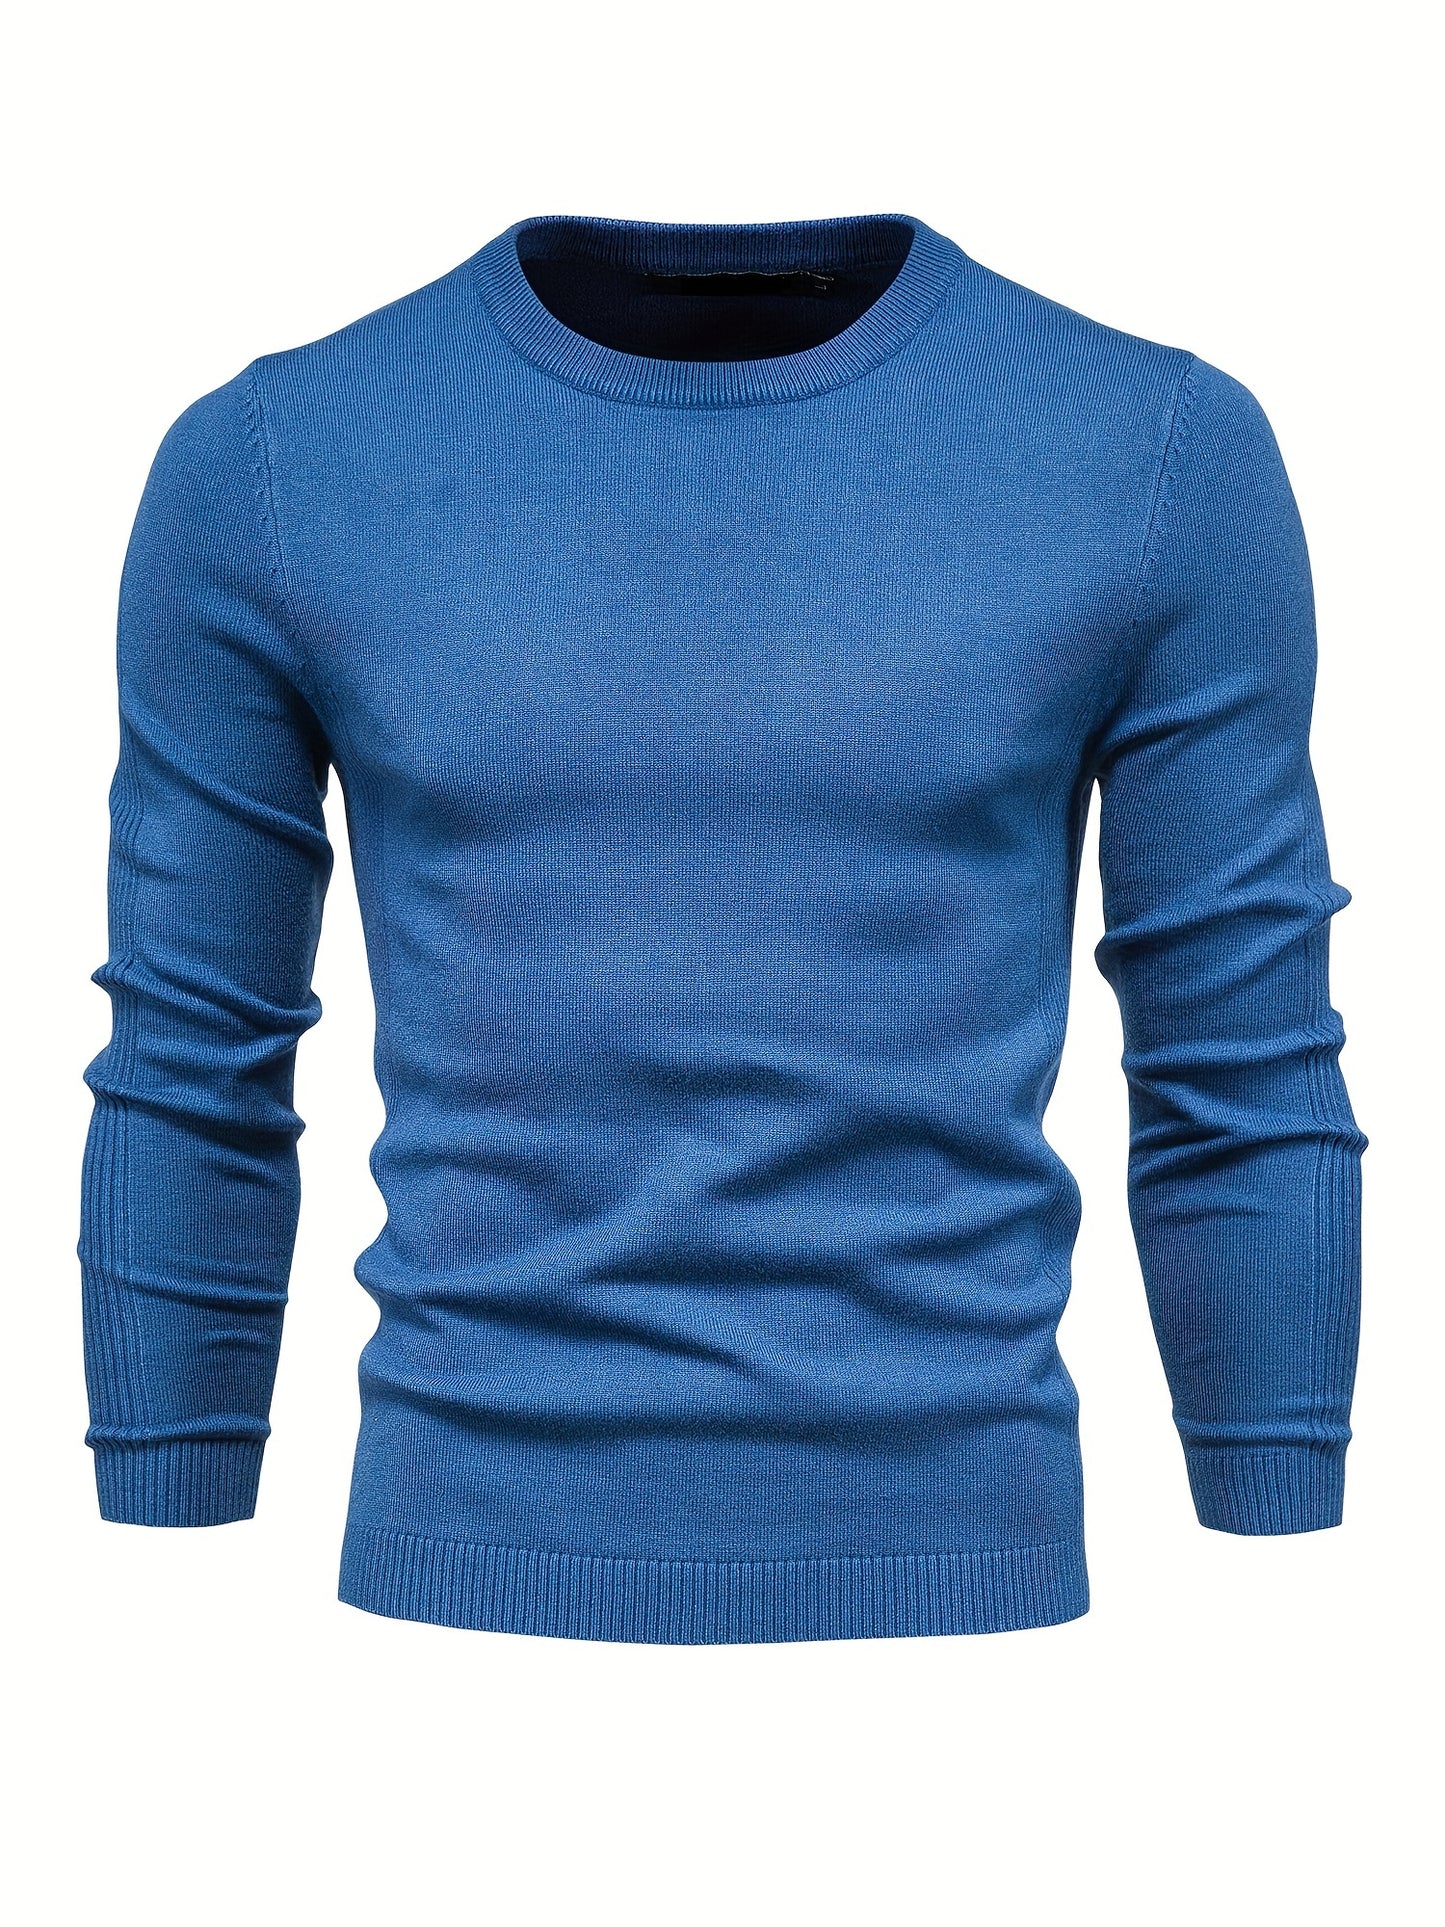 Foruwish - Men's Solid Color Crew Neck Slim Fit Knit Sweater